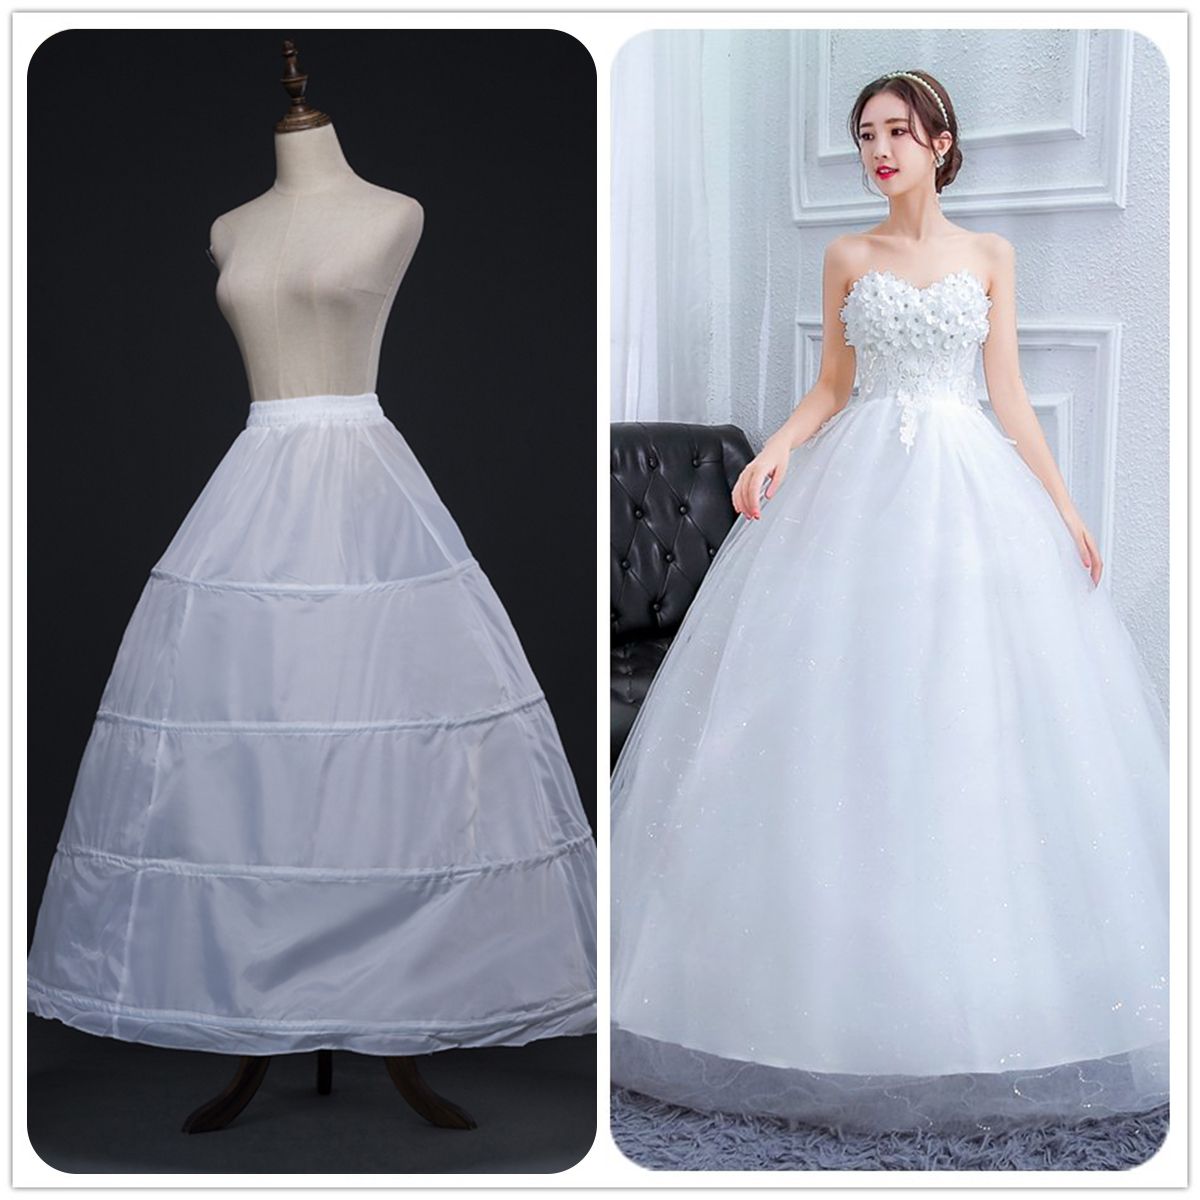 Wedding-Hoop-Hoopless-Crinoline-Petticoat-Underskirt-Dress-Crinoline-Slip-Skirt-Decorations-1495081